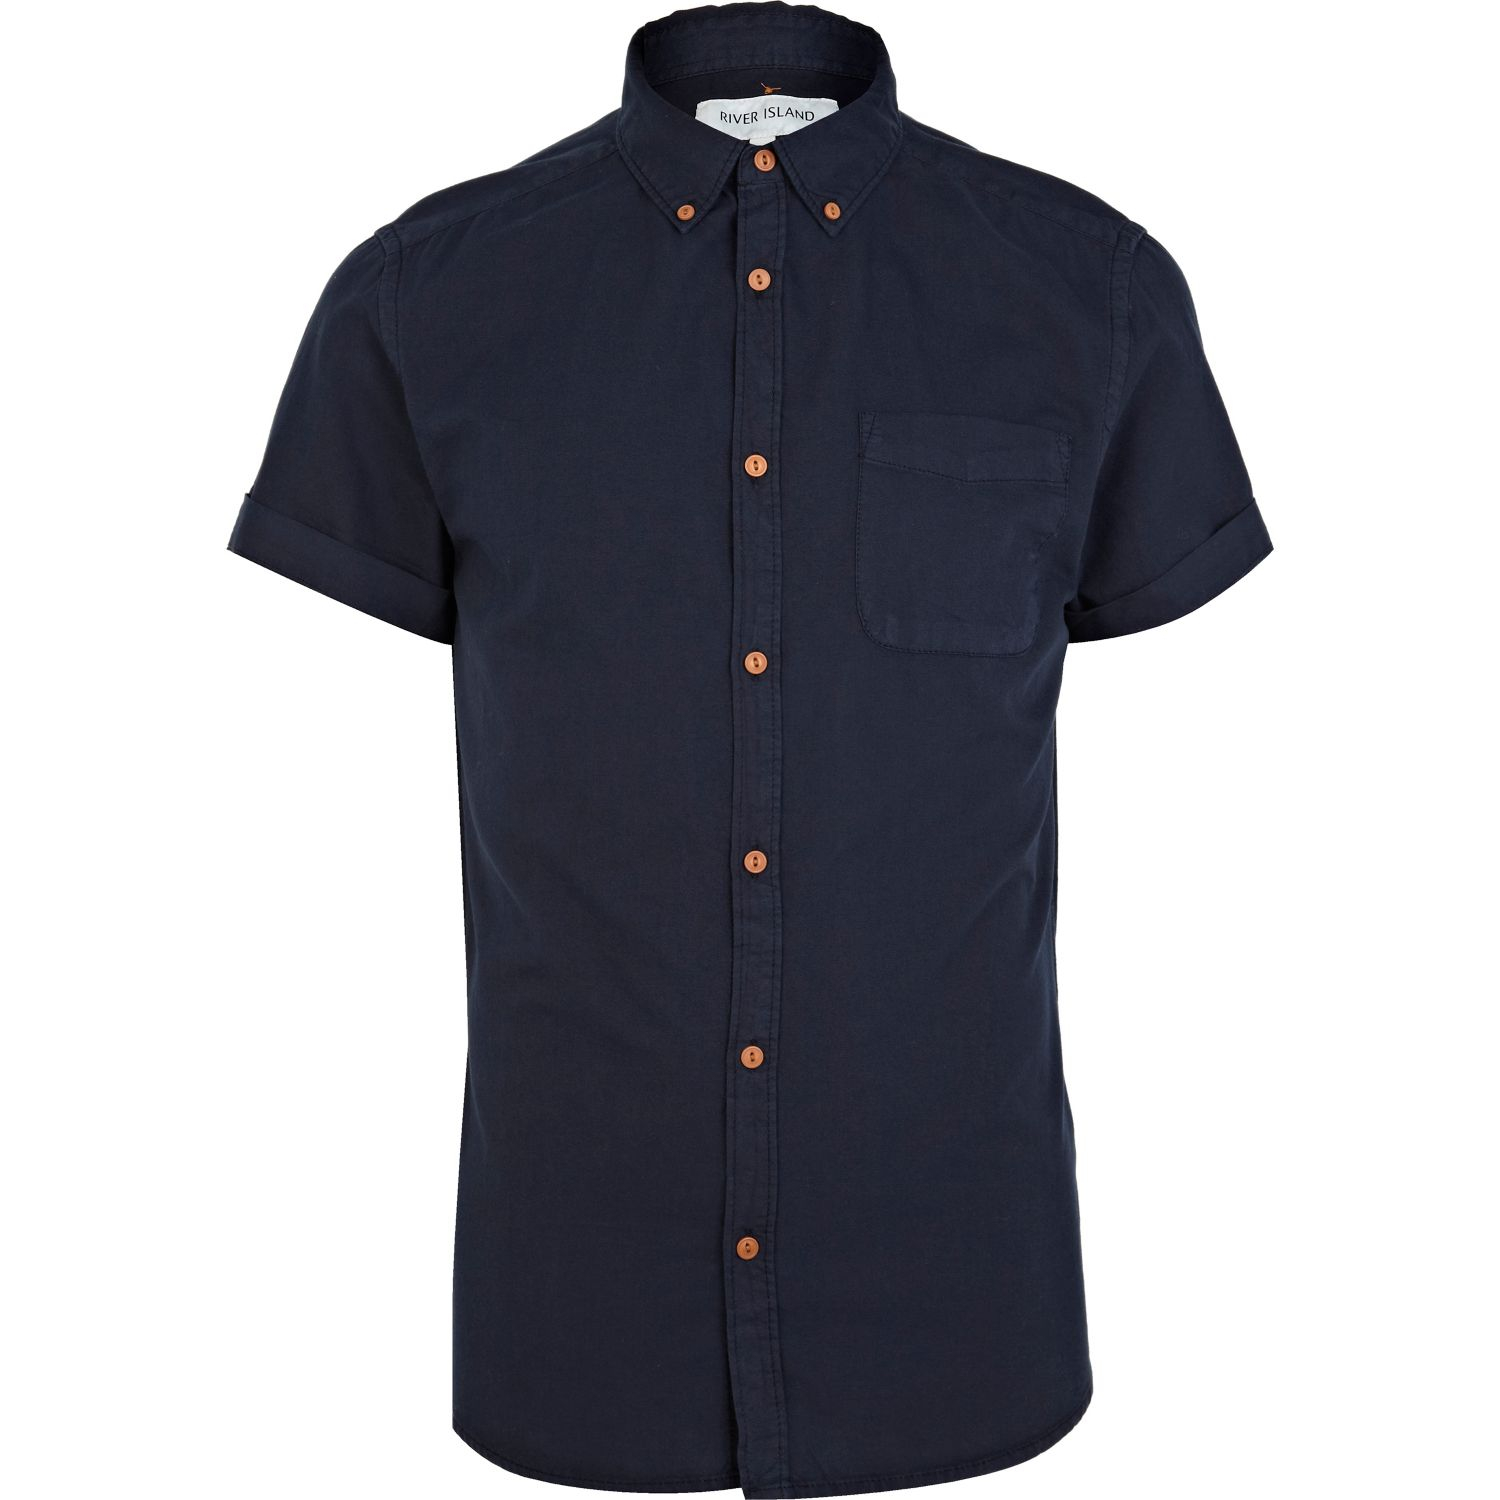 Vendors wholesale navy blue dress shirt short sleeve the